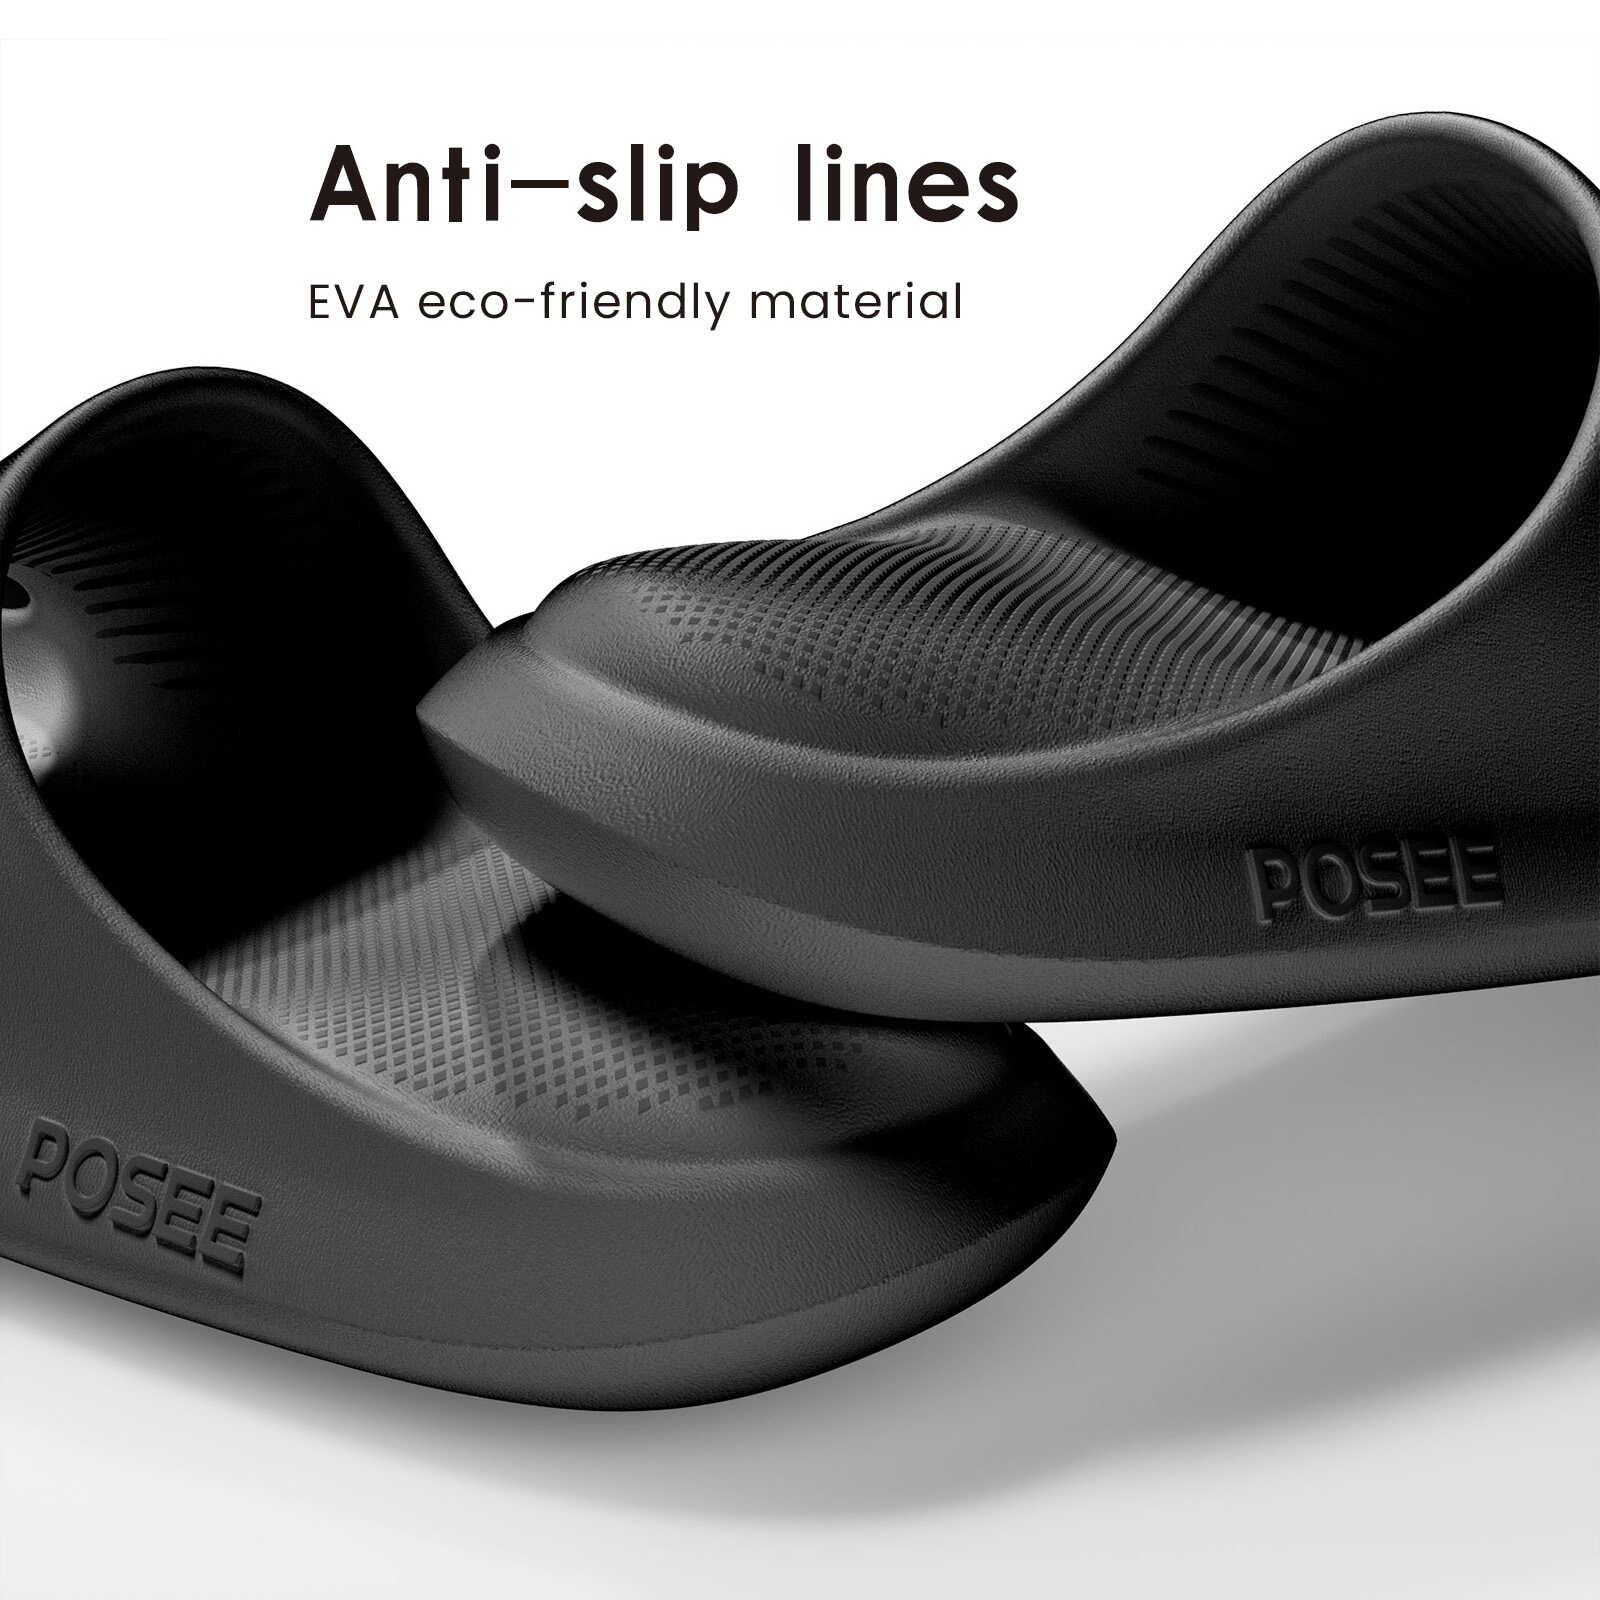 POSEE Pillow Slippers Slides for Women Men Non-Slip Cloud Slides House Bedroom Shoes Shower Sandals - image 4 of 5